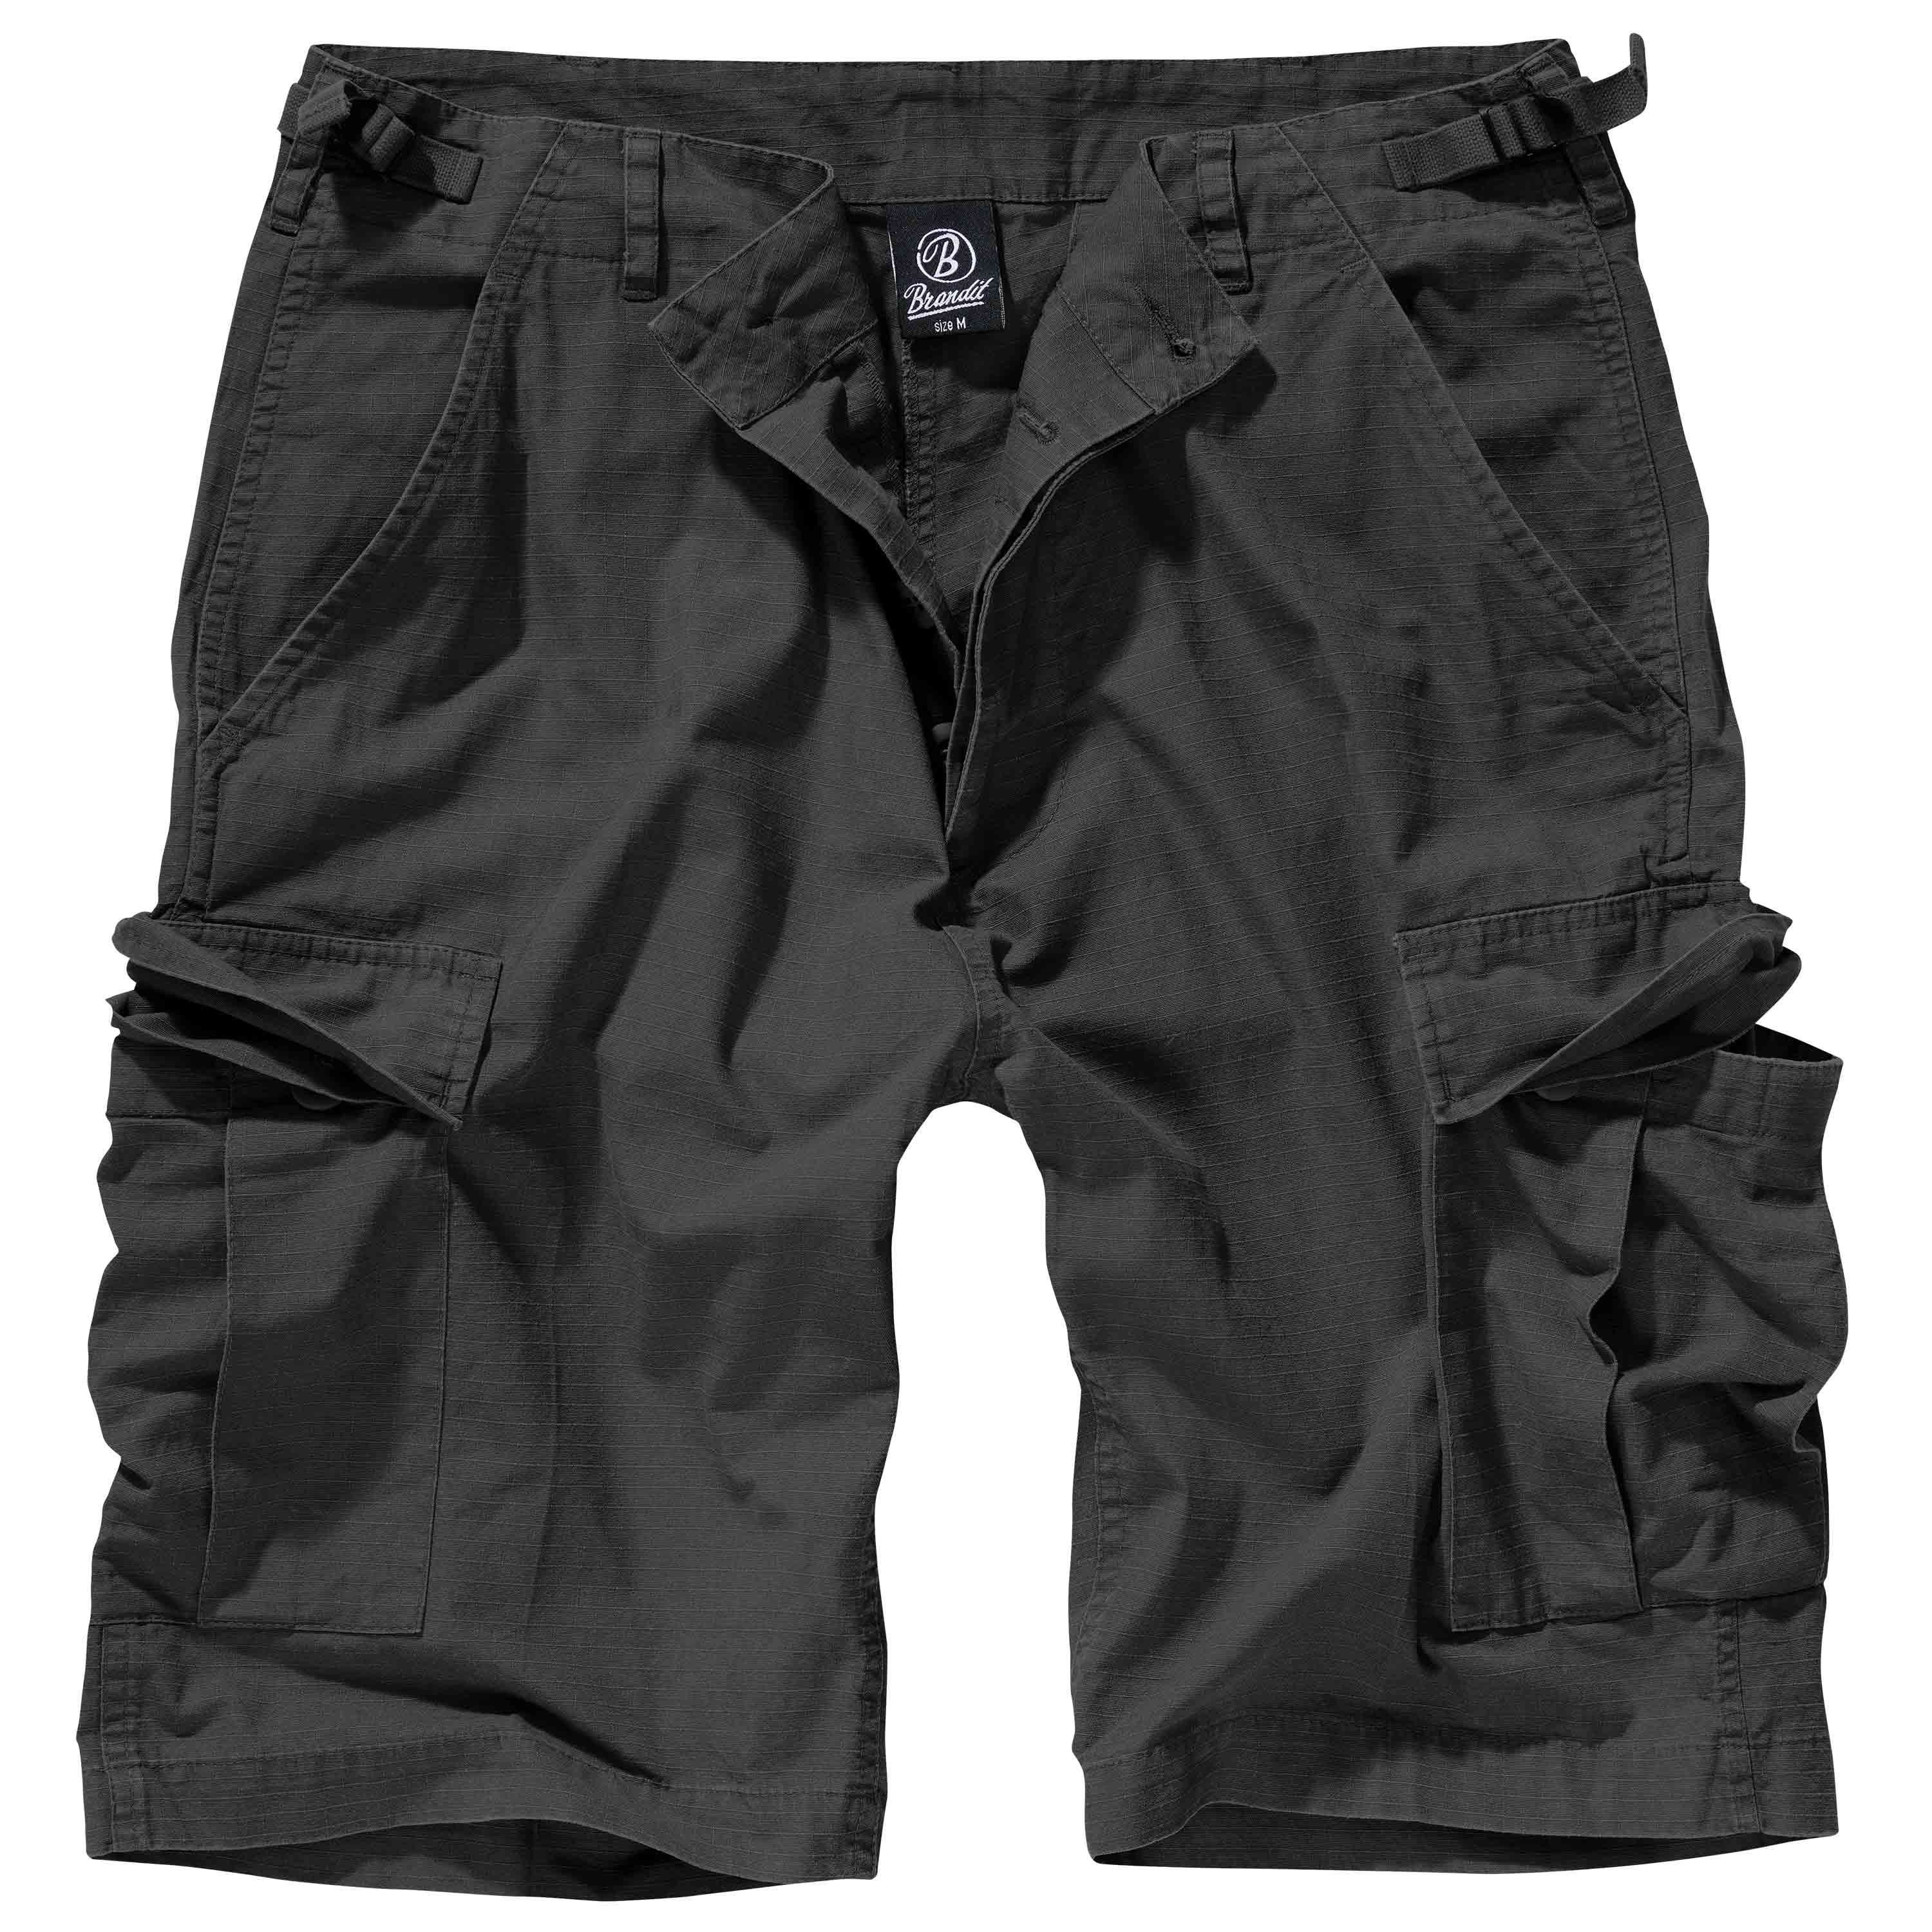 Purchase the Brandit Ripstop BDU Shorts black by ASMC